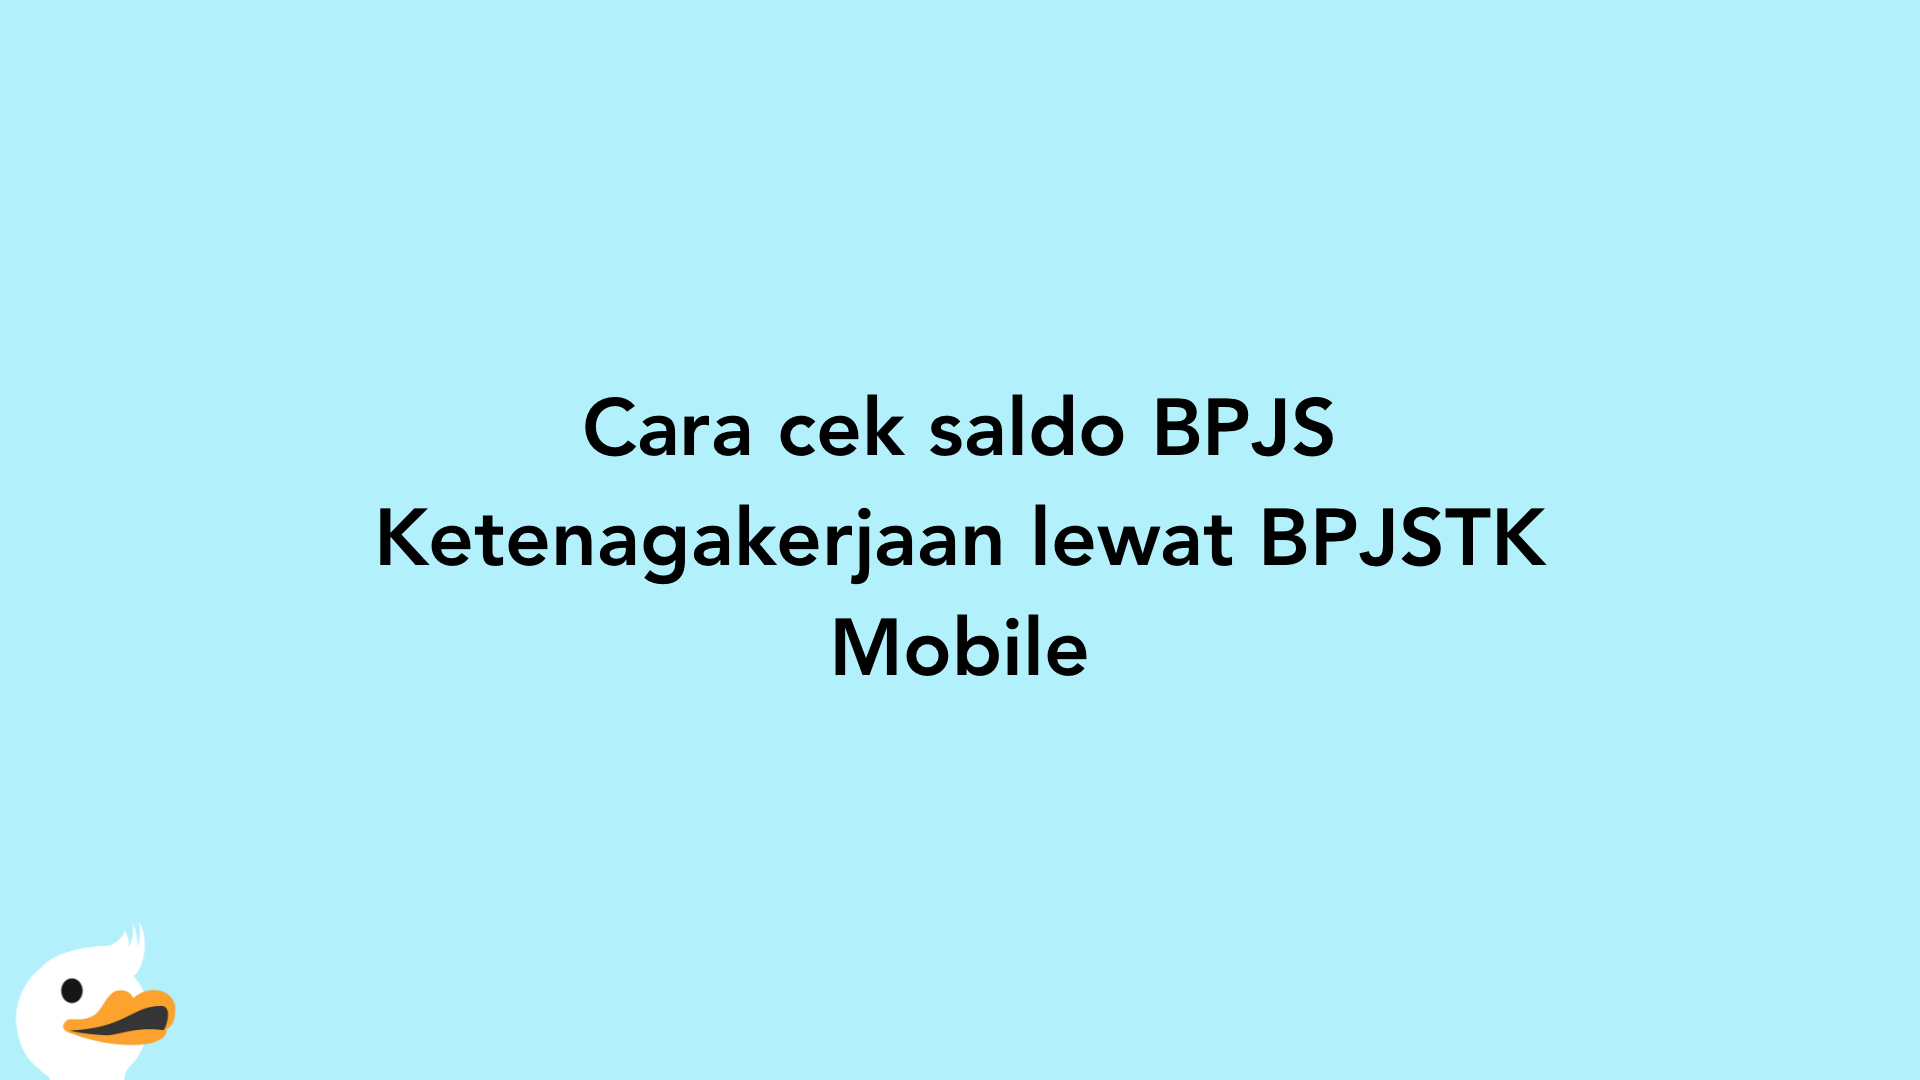 Cara cek saldo BPJS Ketenagakerjaan lewat BPJSTK Mobile